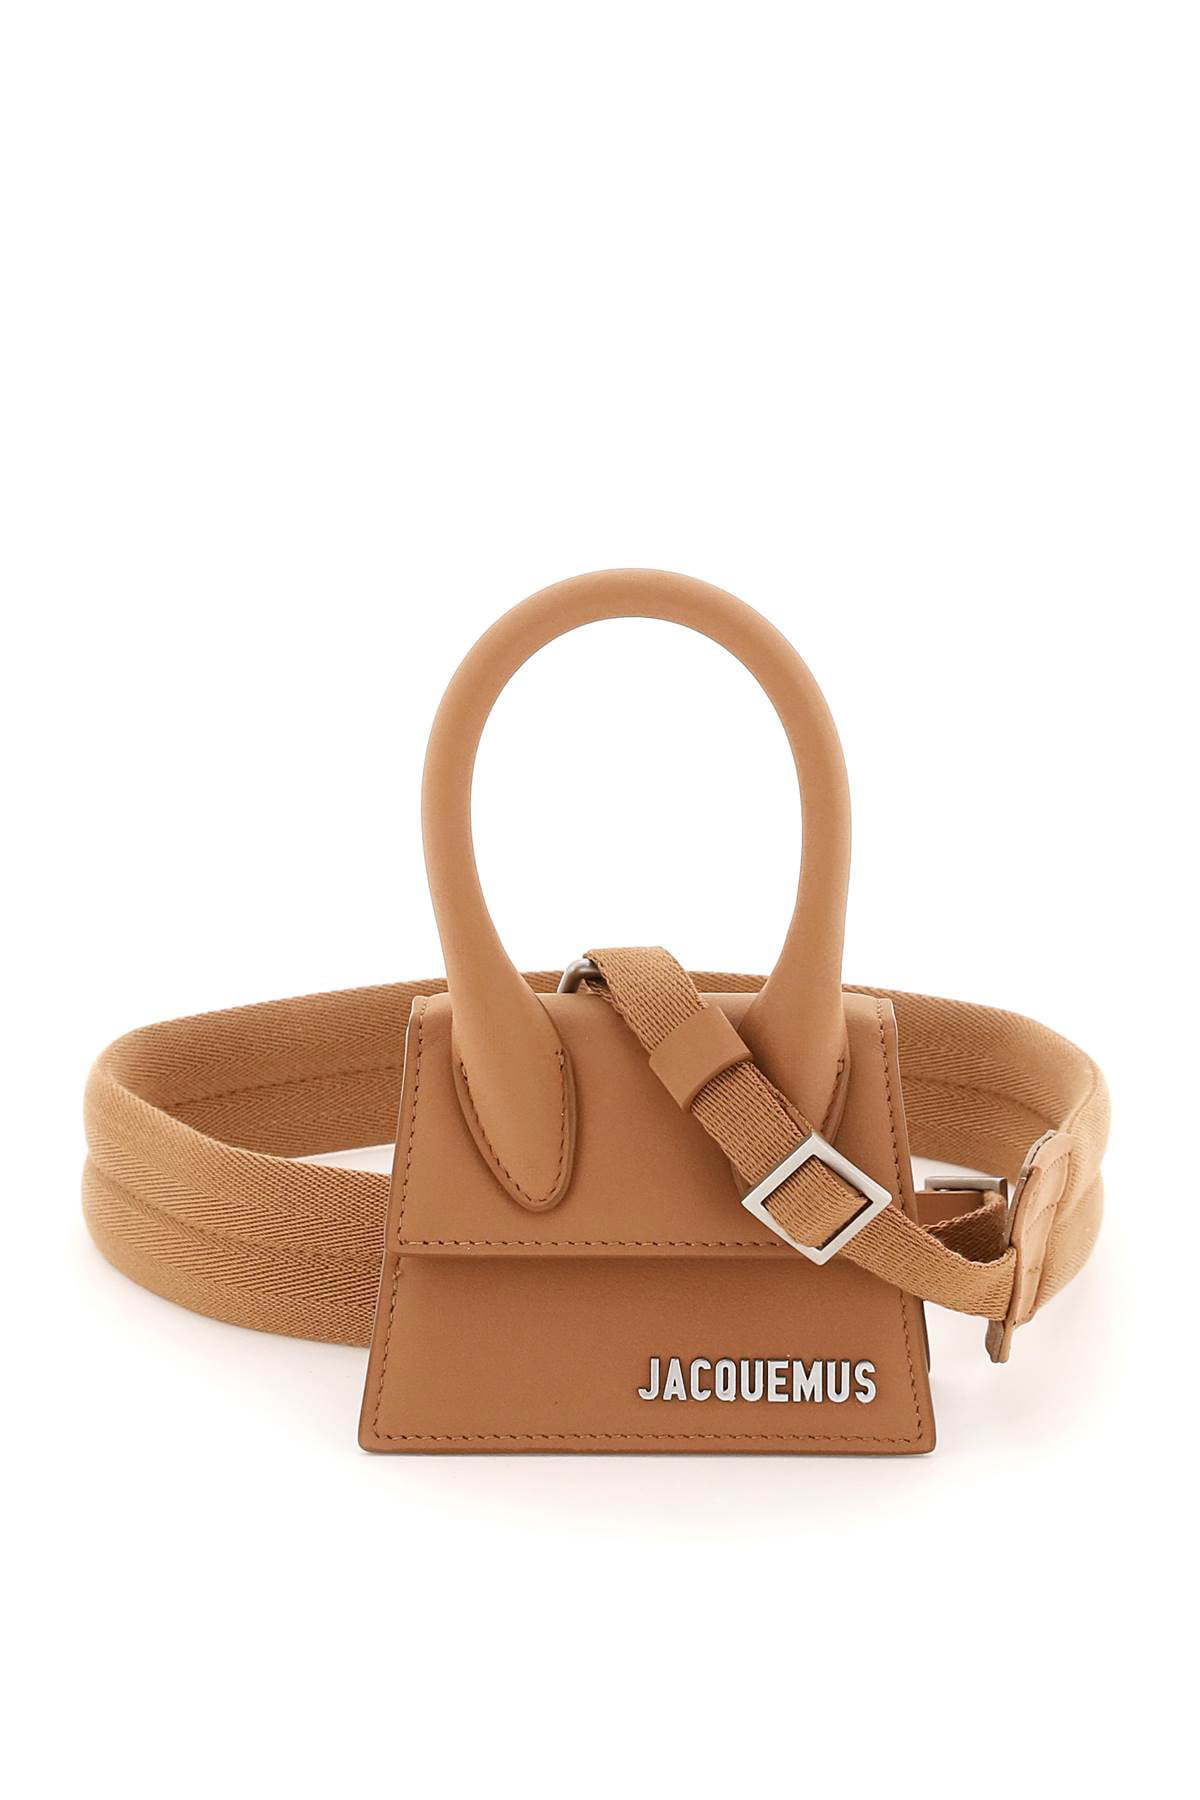 Jacquemus 'le chiquito' mini bag 